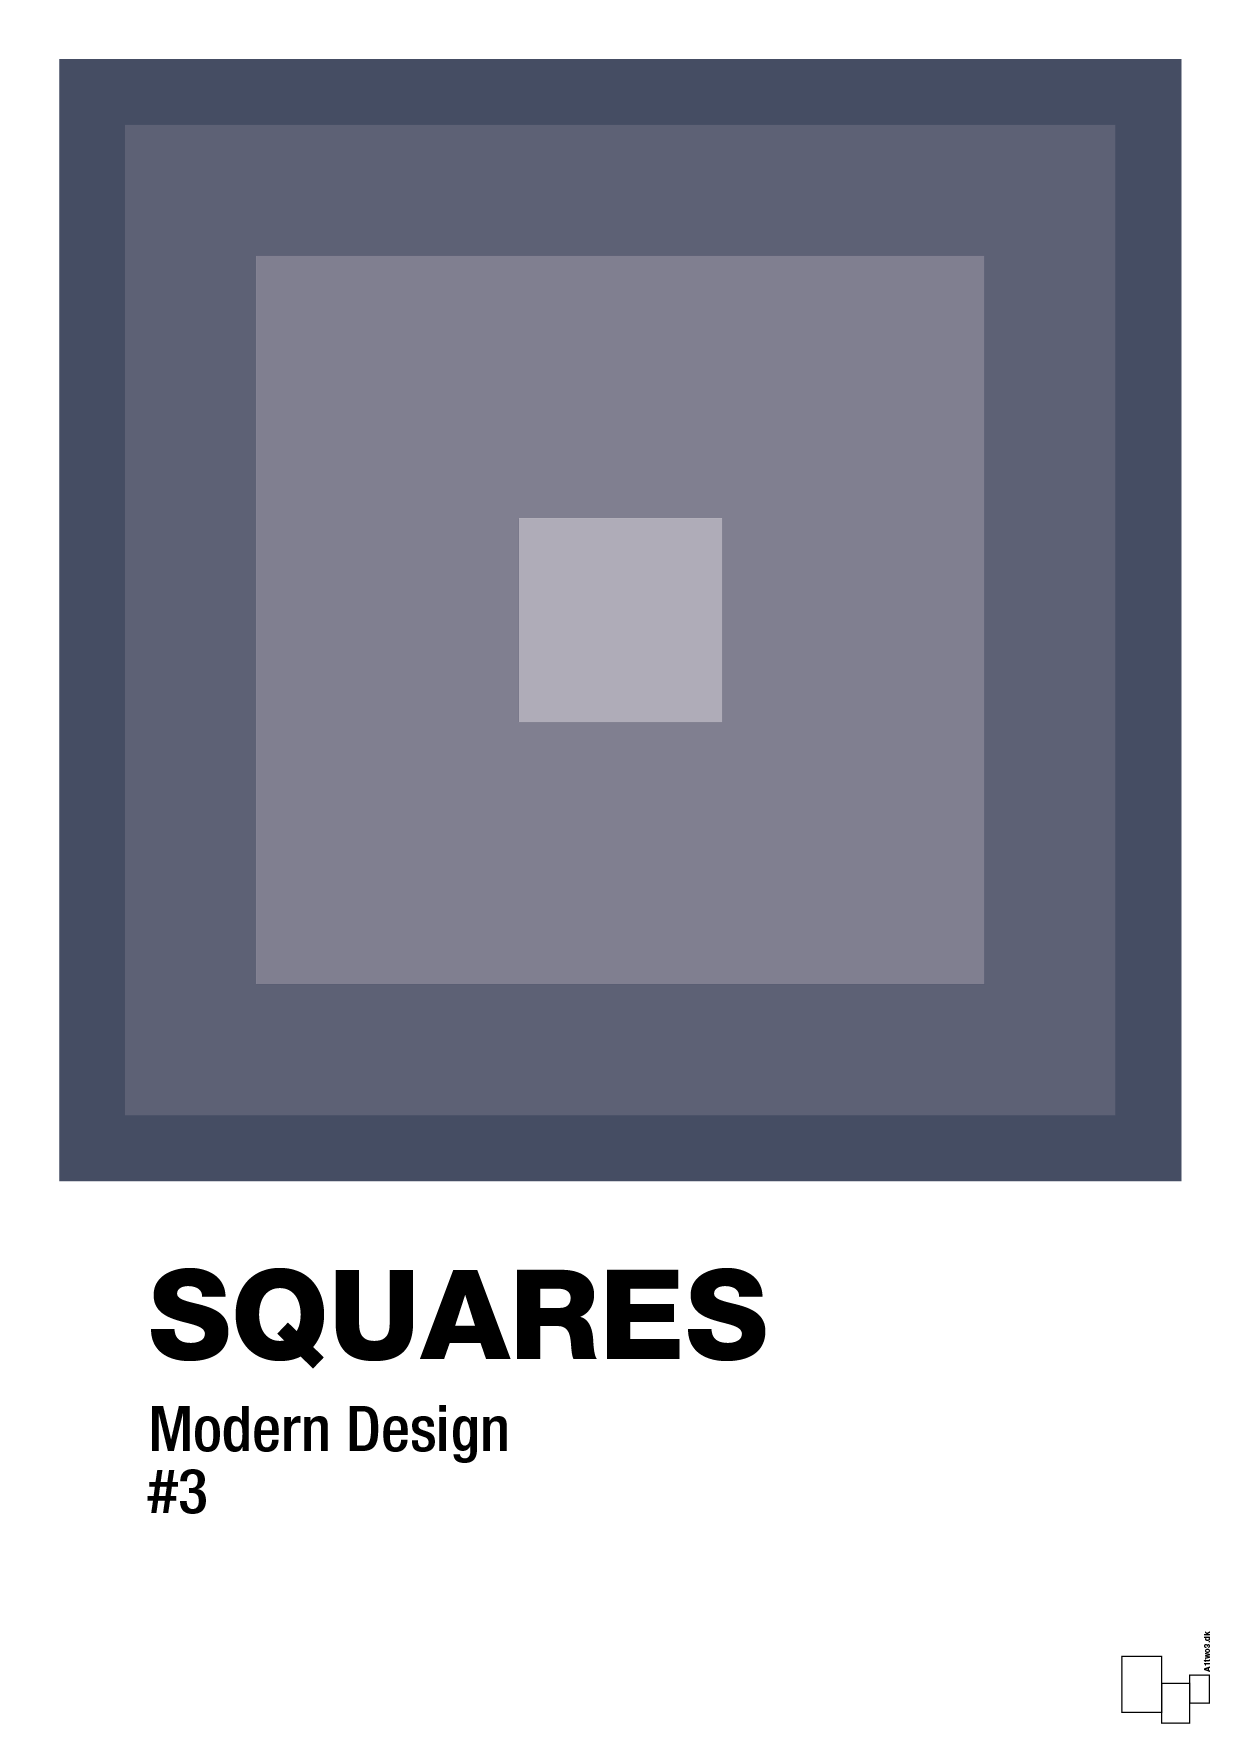 squares #3 - Plakat med Grafik i Petrol